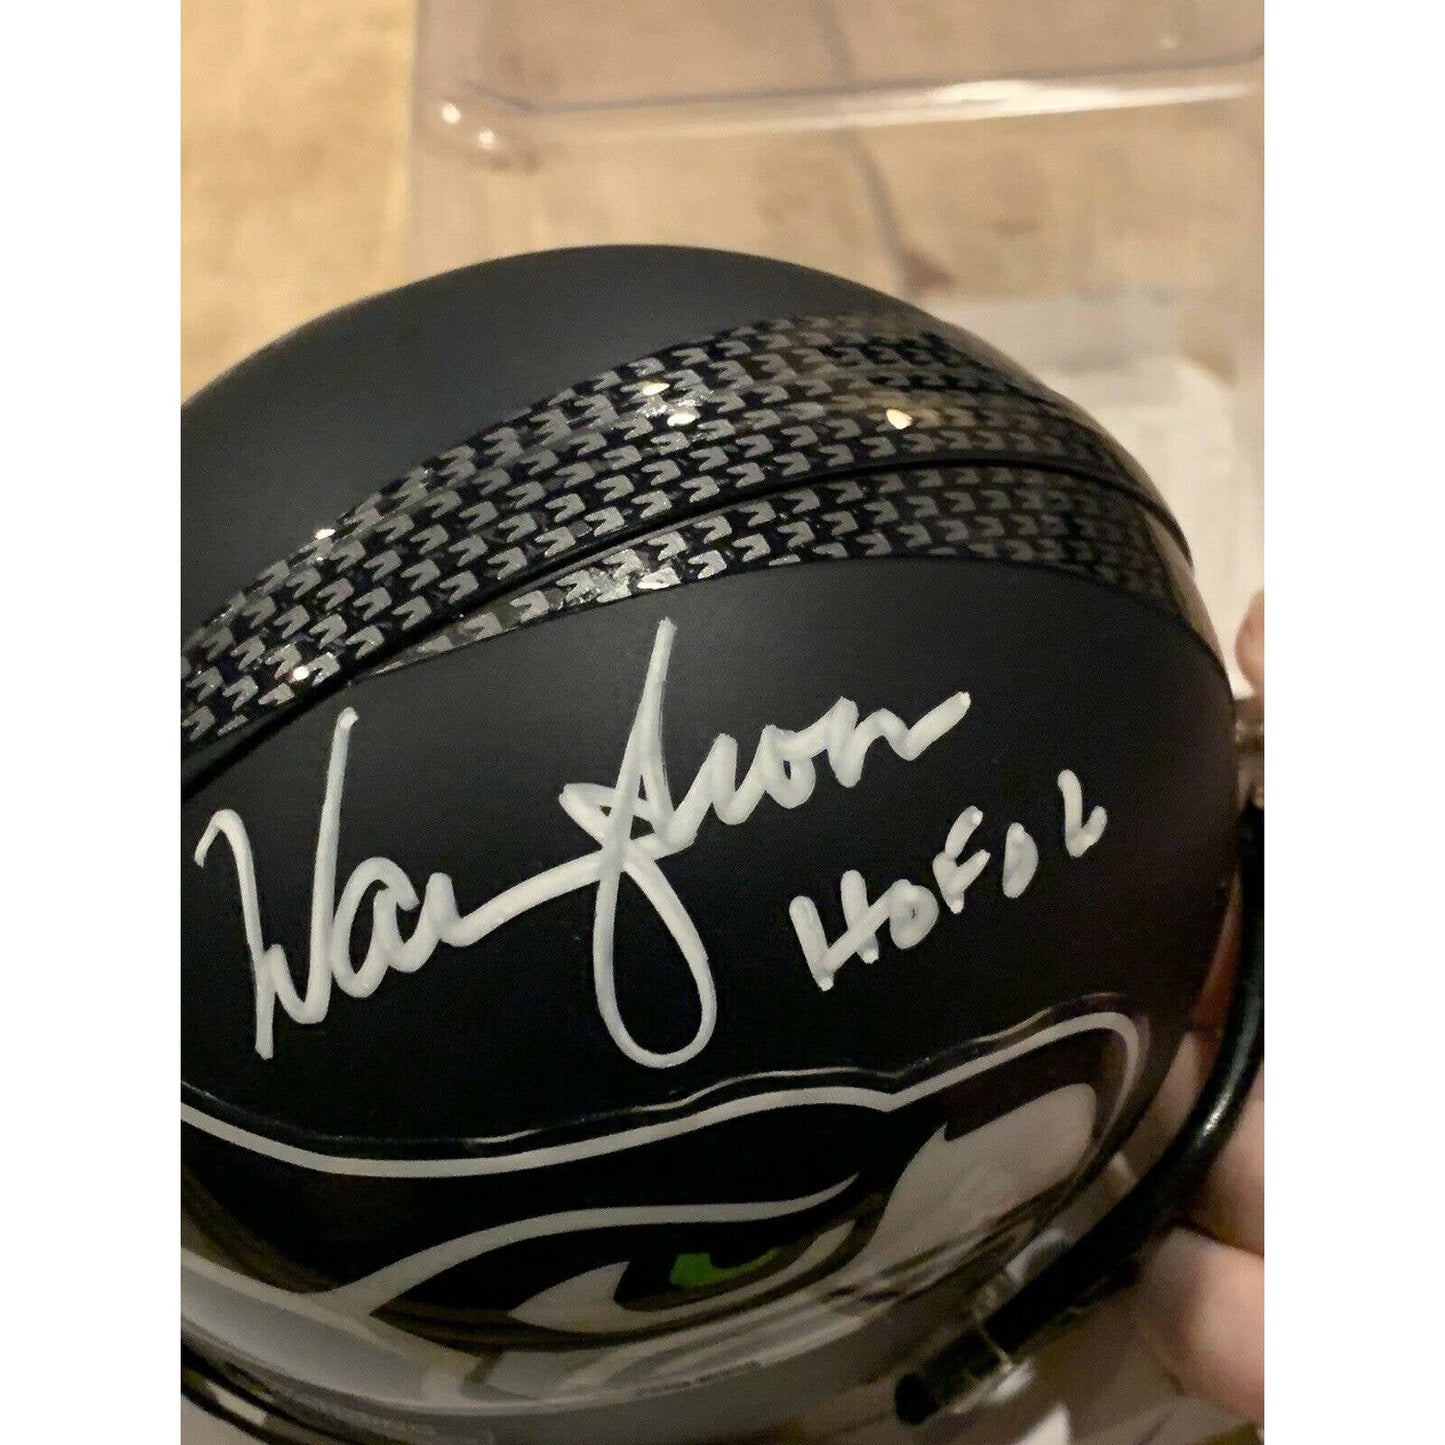 Warren Moon Autographed/Signed Mini Helmet TRISTAR COA Seattle Seahawks B - TreasuresEvolved